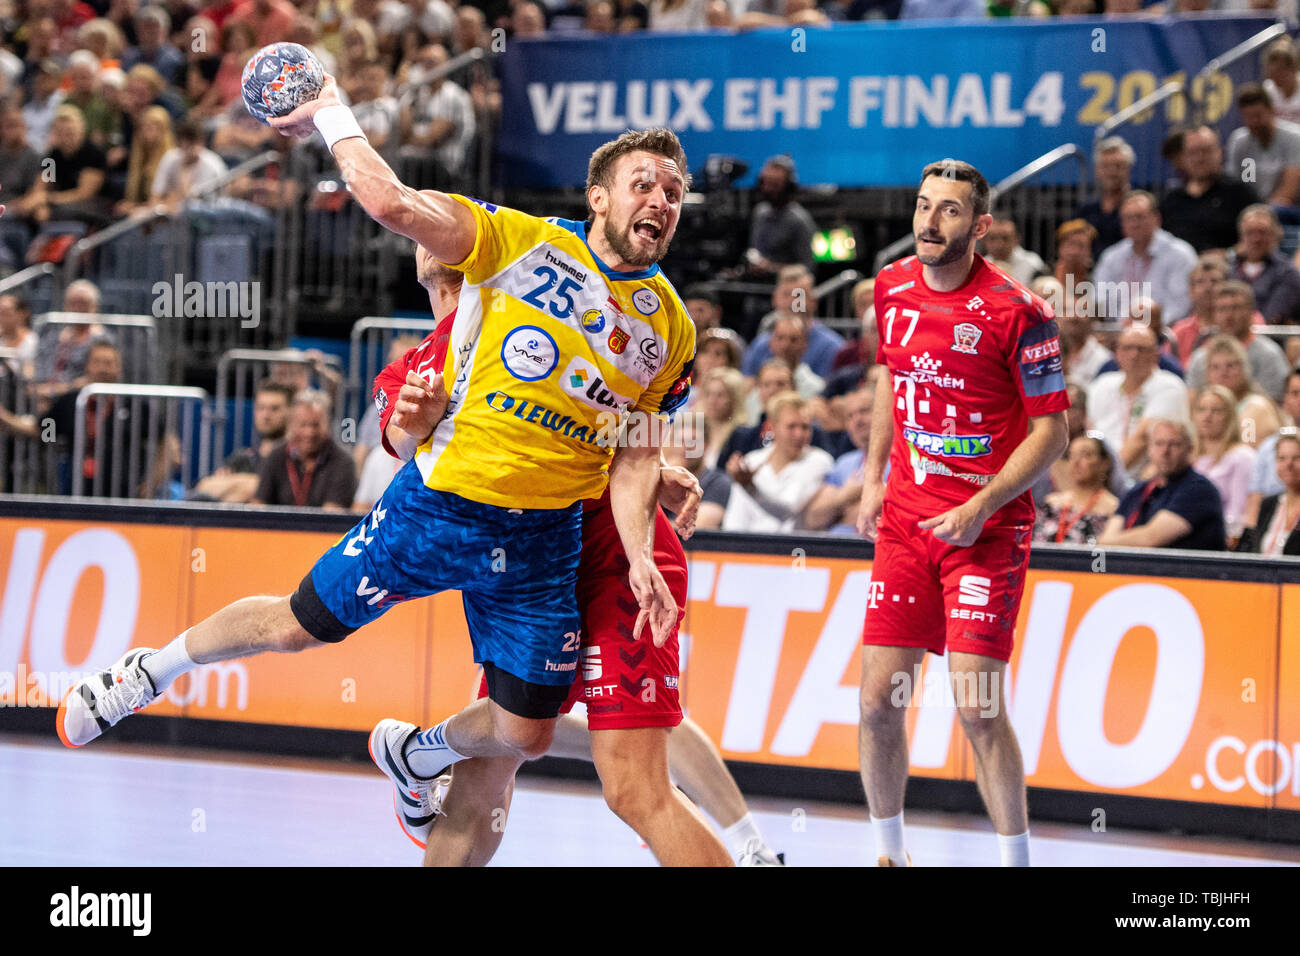 Cologne, Germany. 01st June, 2019. Handball: Champions League, Telekom  Veszprem - KS Vive Kielce, final round, final